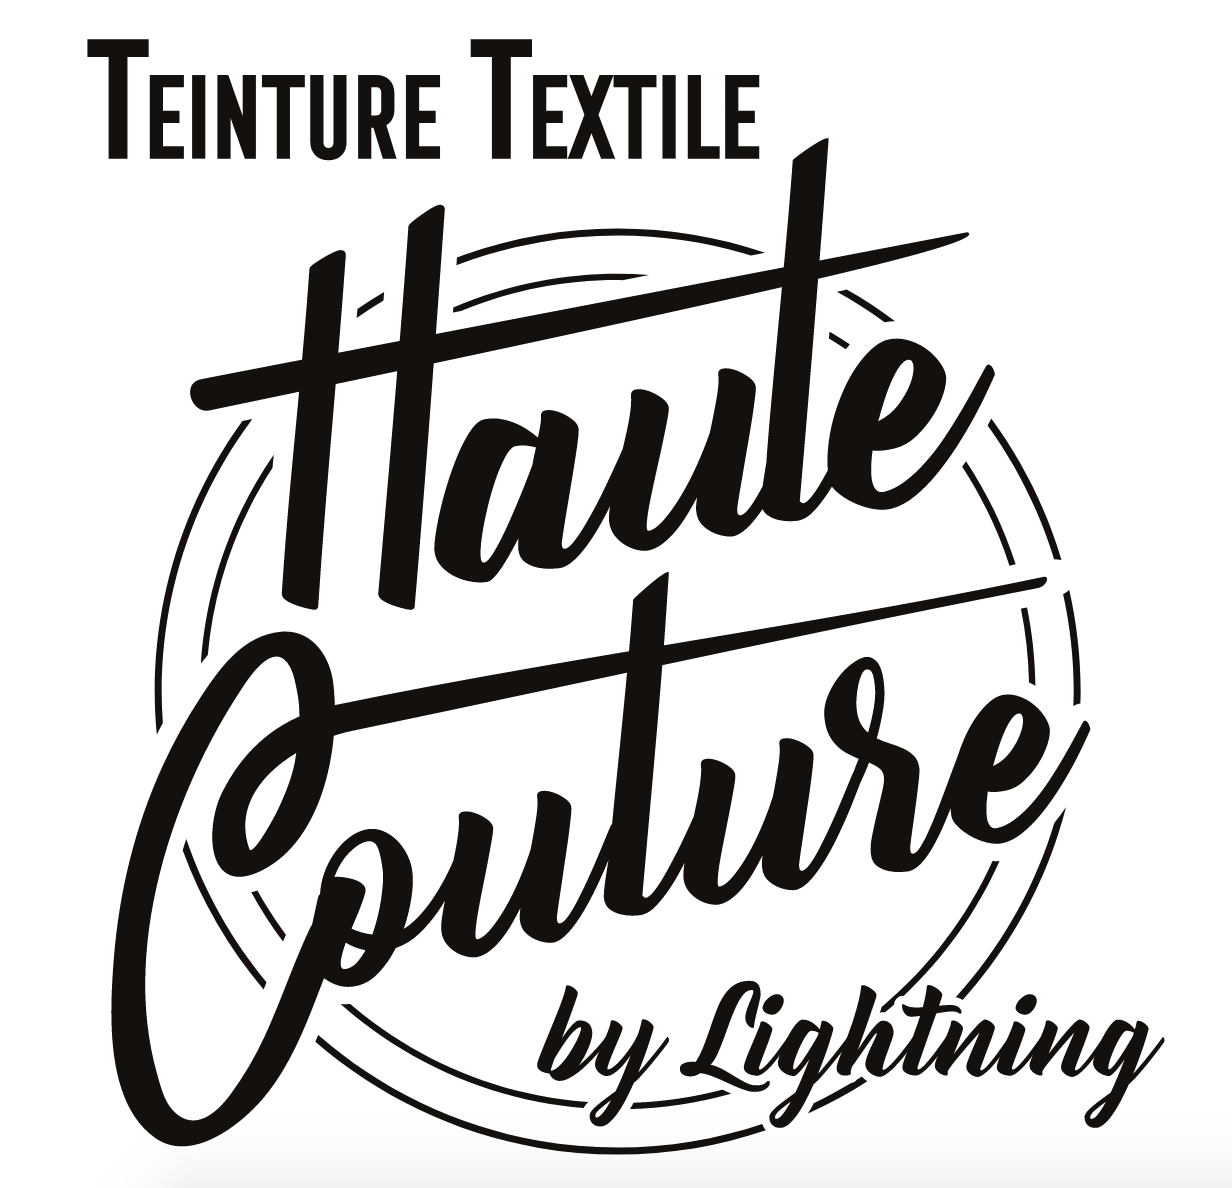 Teinture Textile - Haute Couture